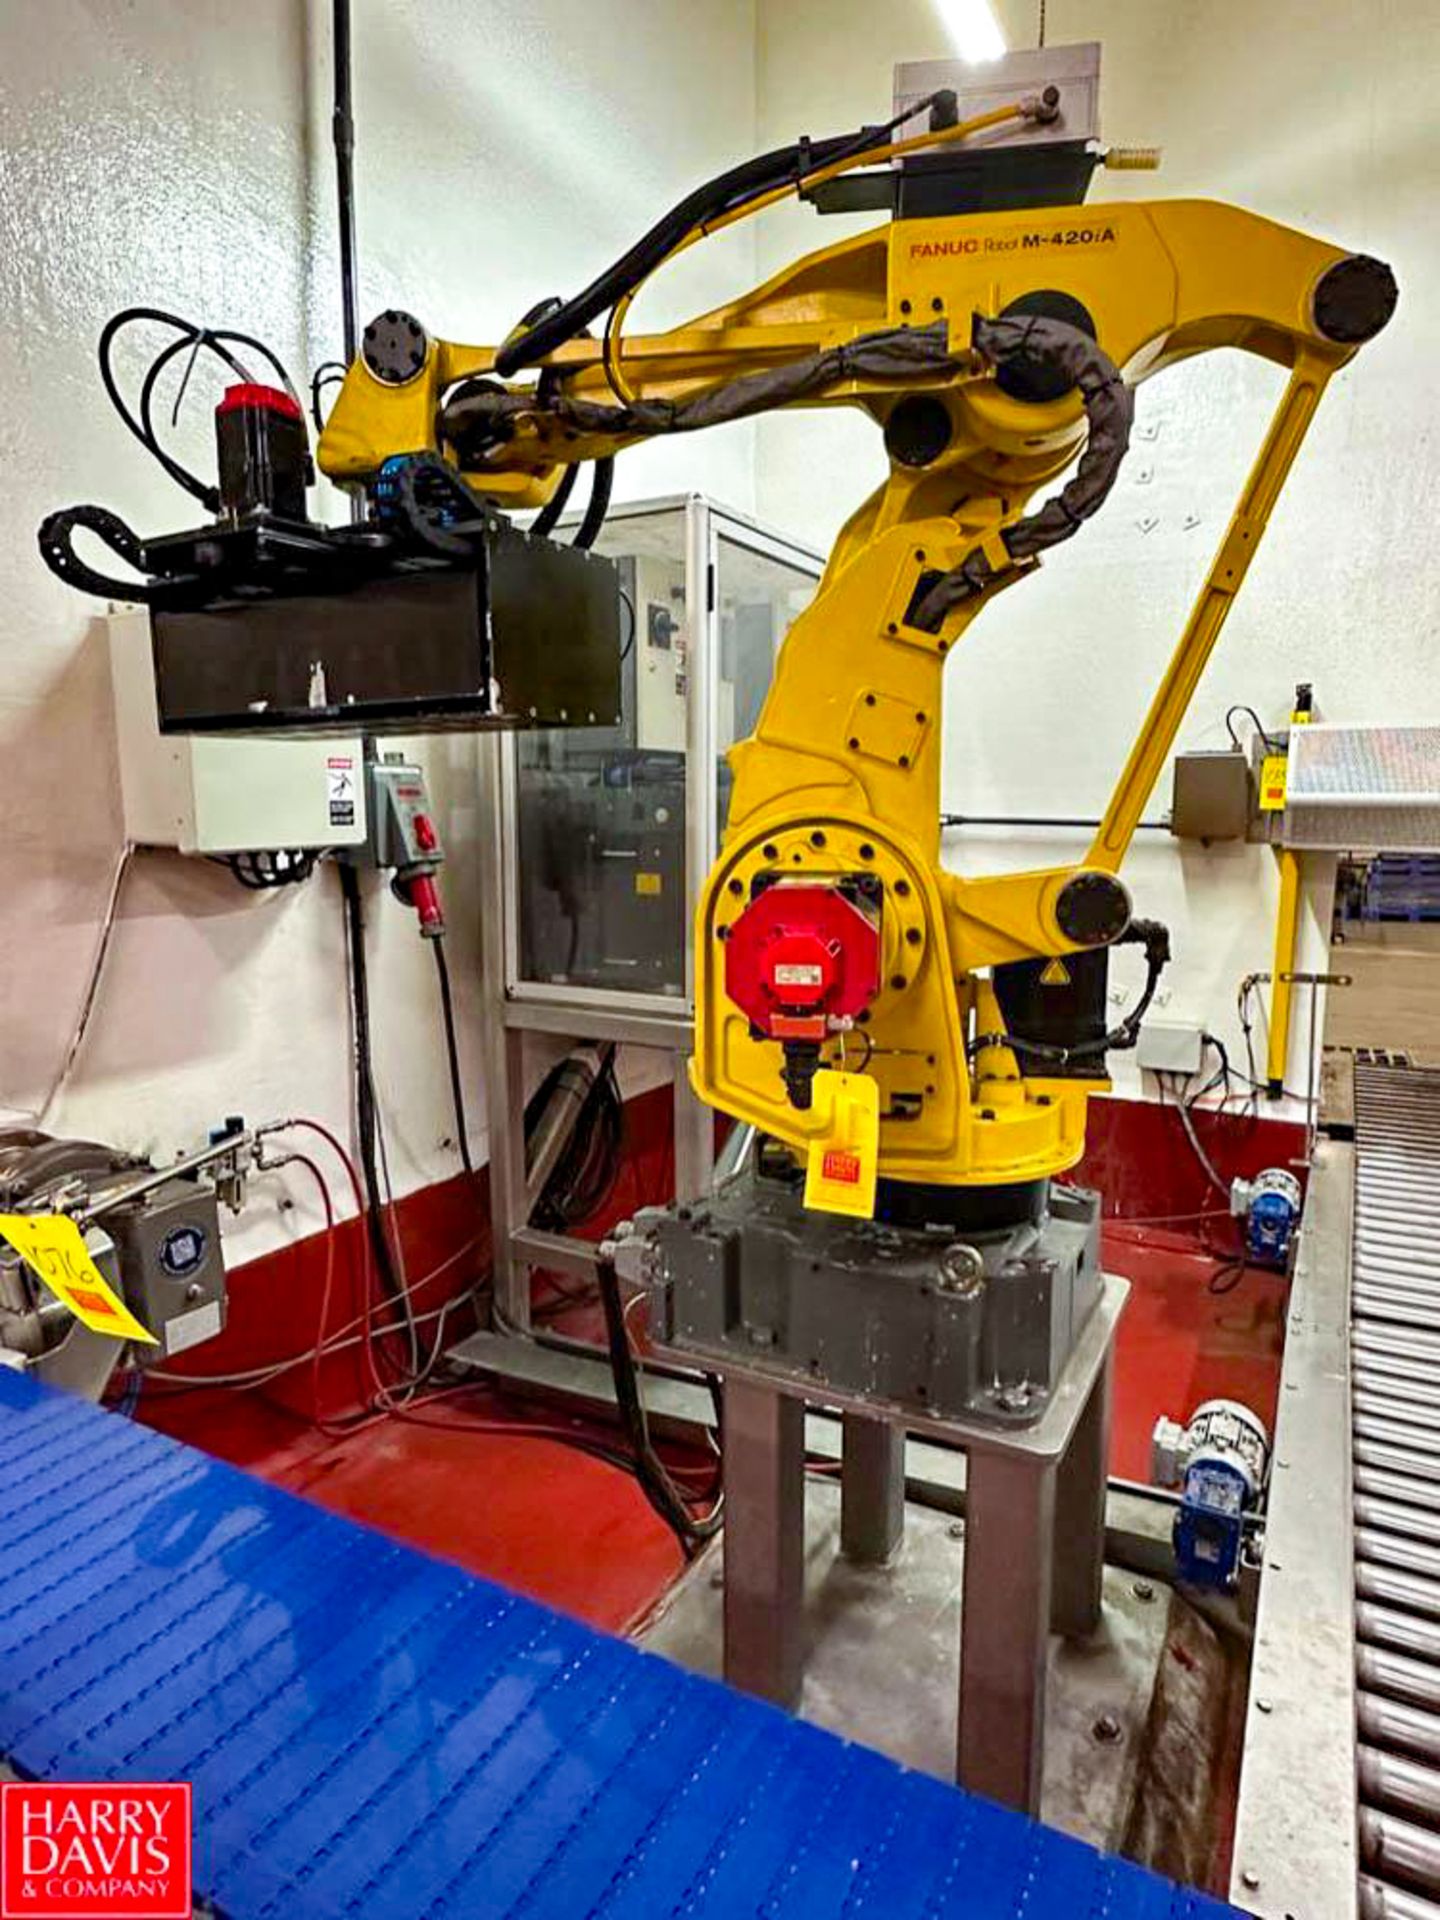 Fanuc Palletizing Robot, Model: M-420iA, S/N: R07442762 with Fanuc R-30iA Control System, R-J3iC Pow